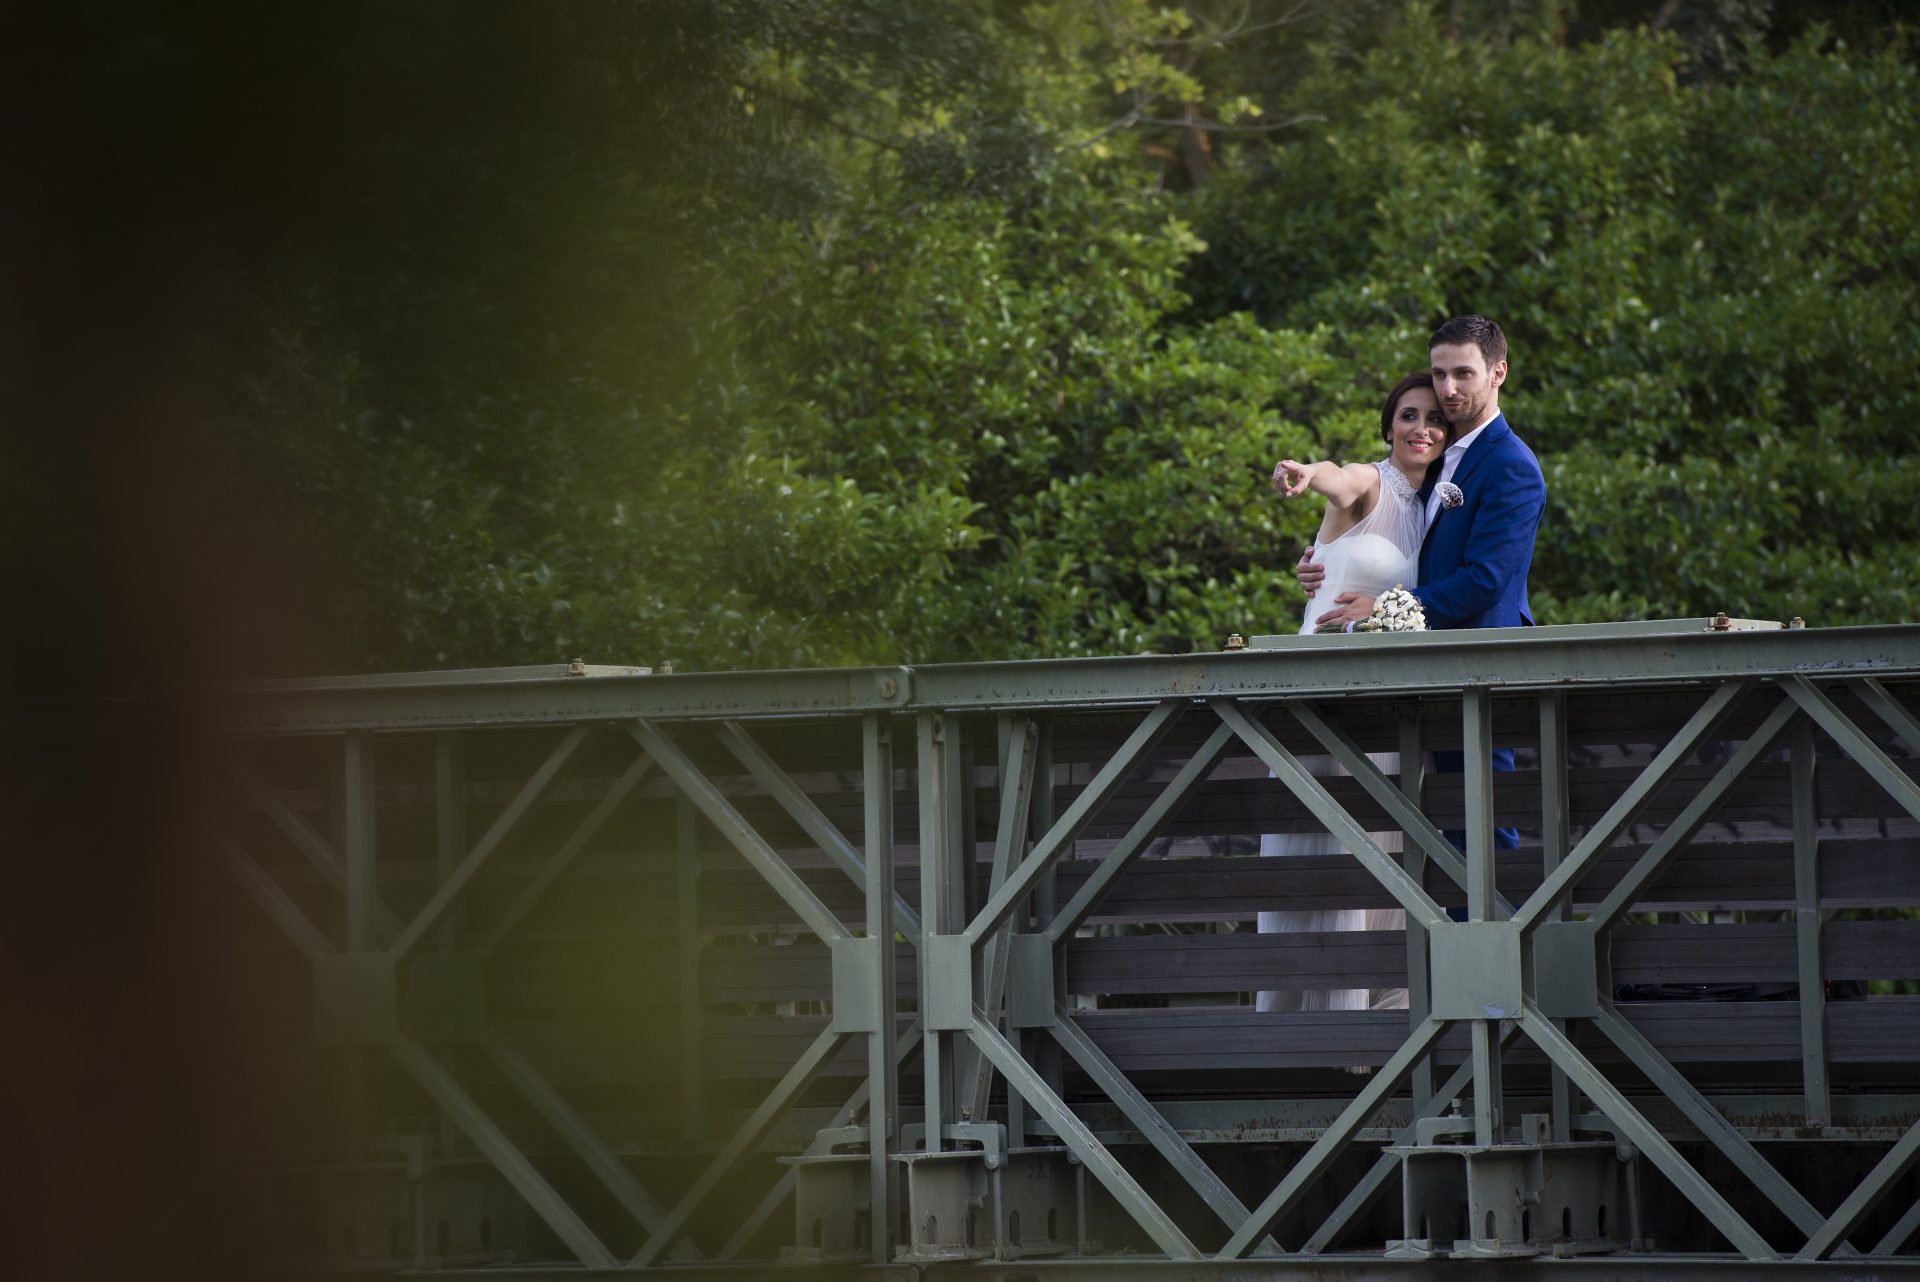 Next day φωτογράφηση γάμου σε γέφυρα